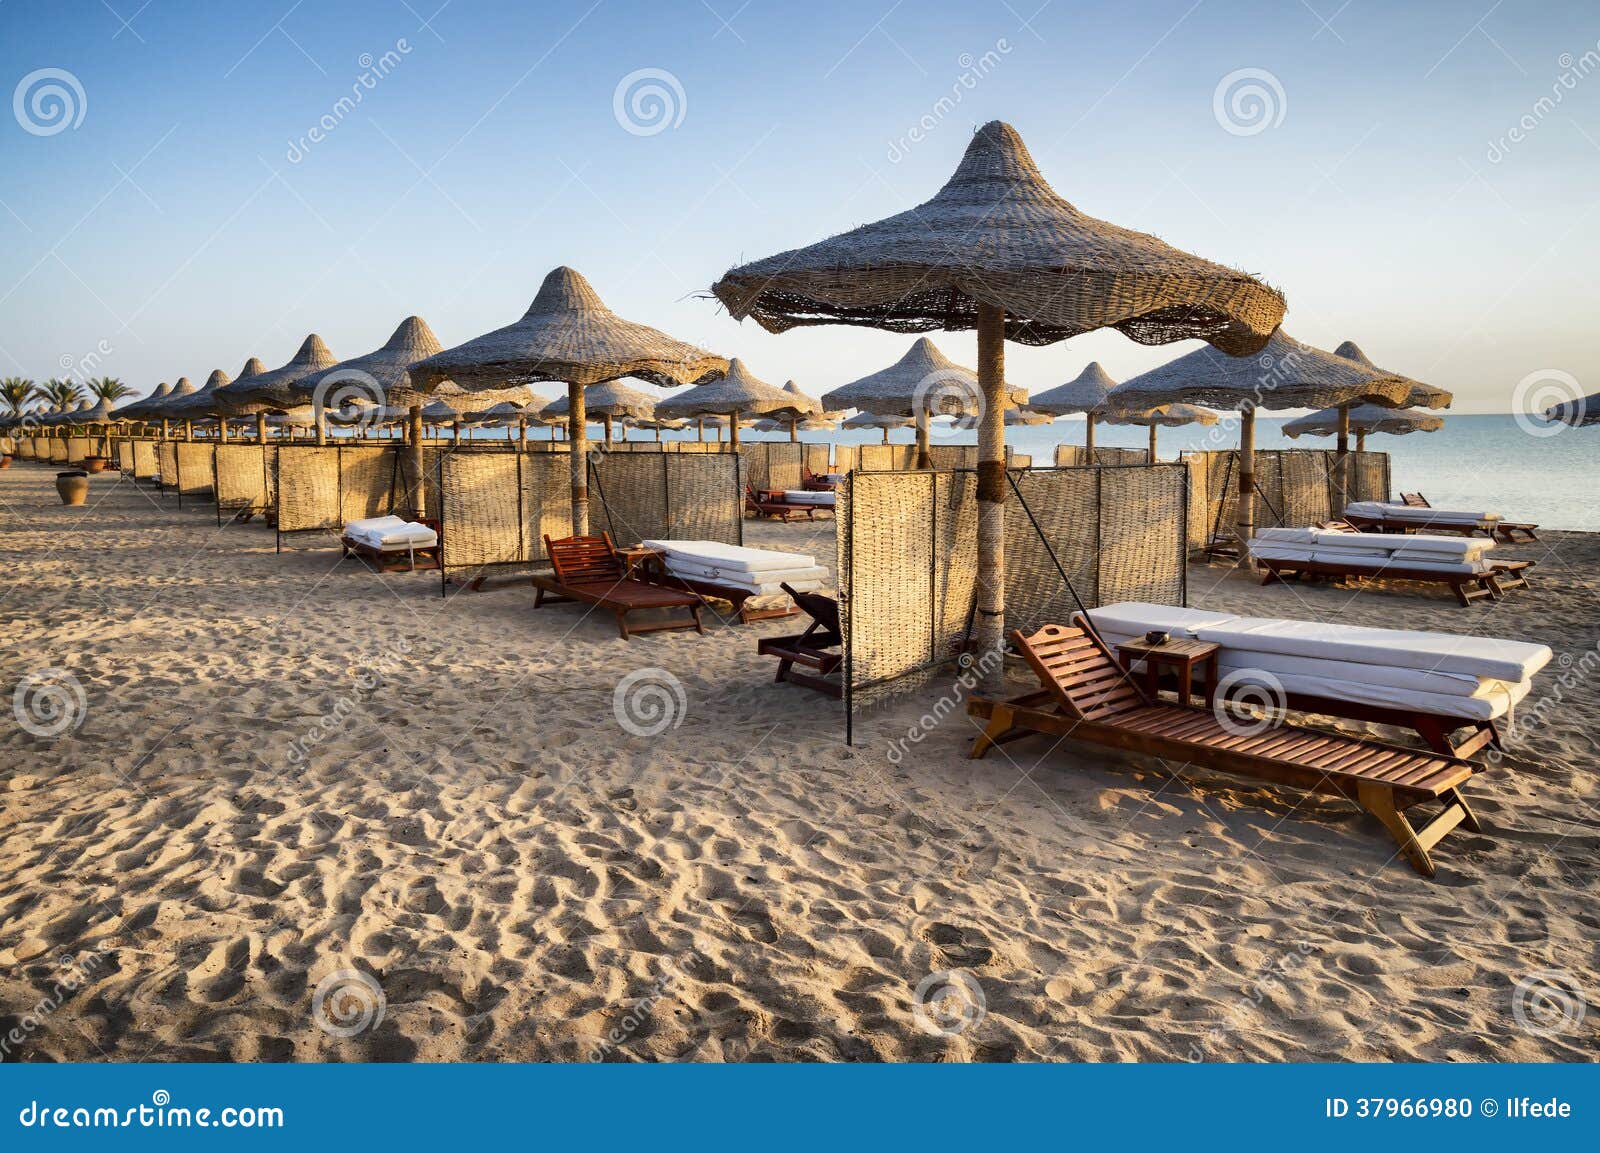 beach in marsa alam, egypt